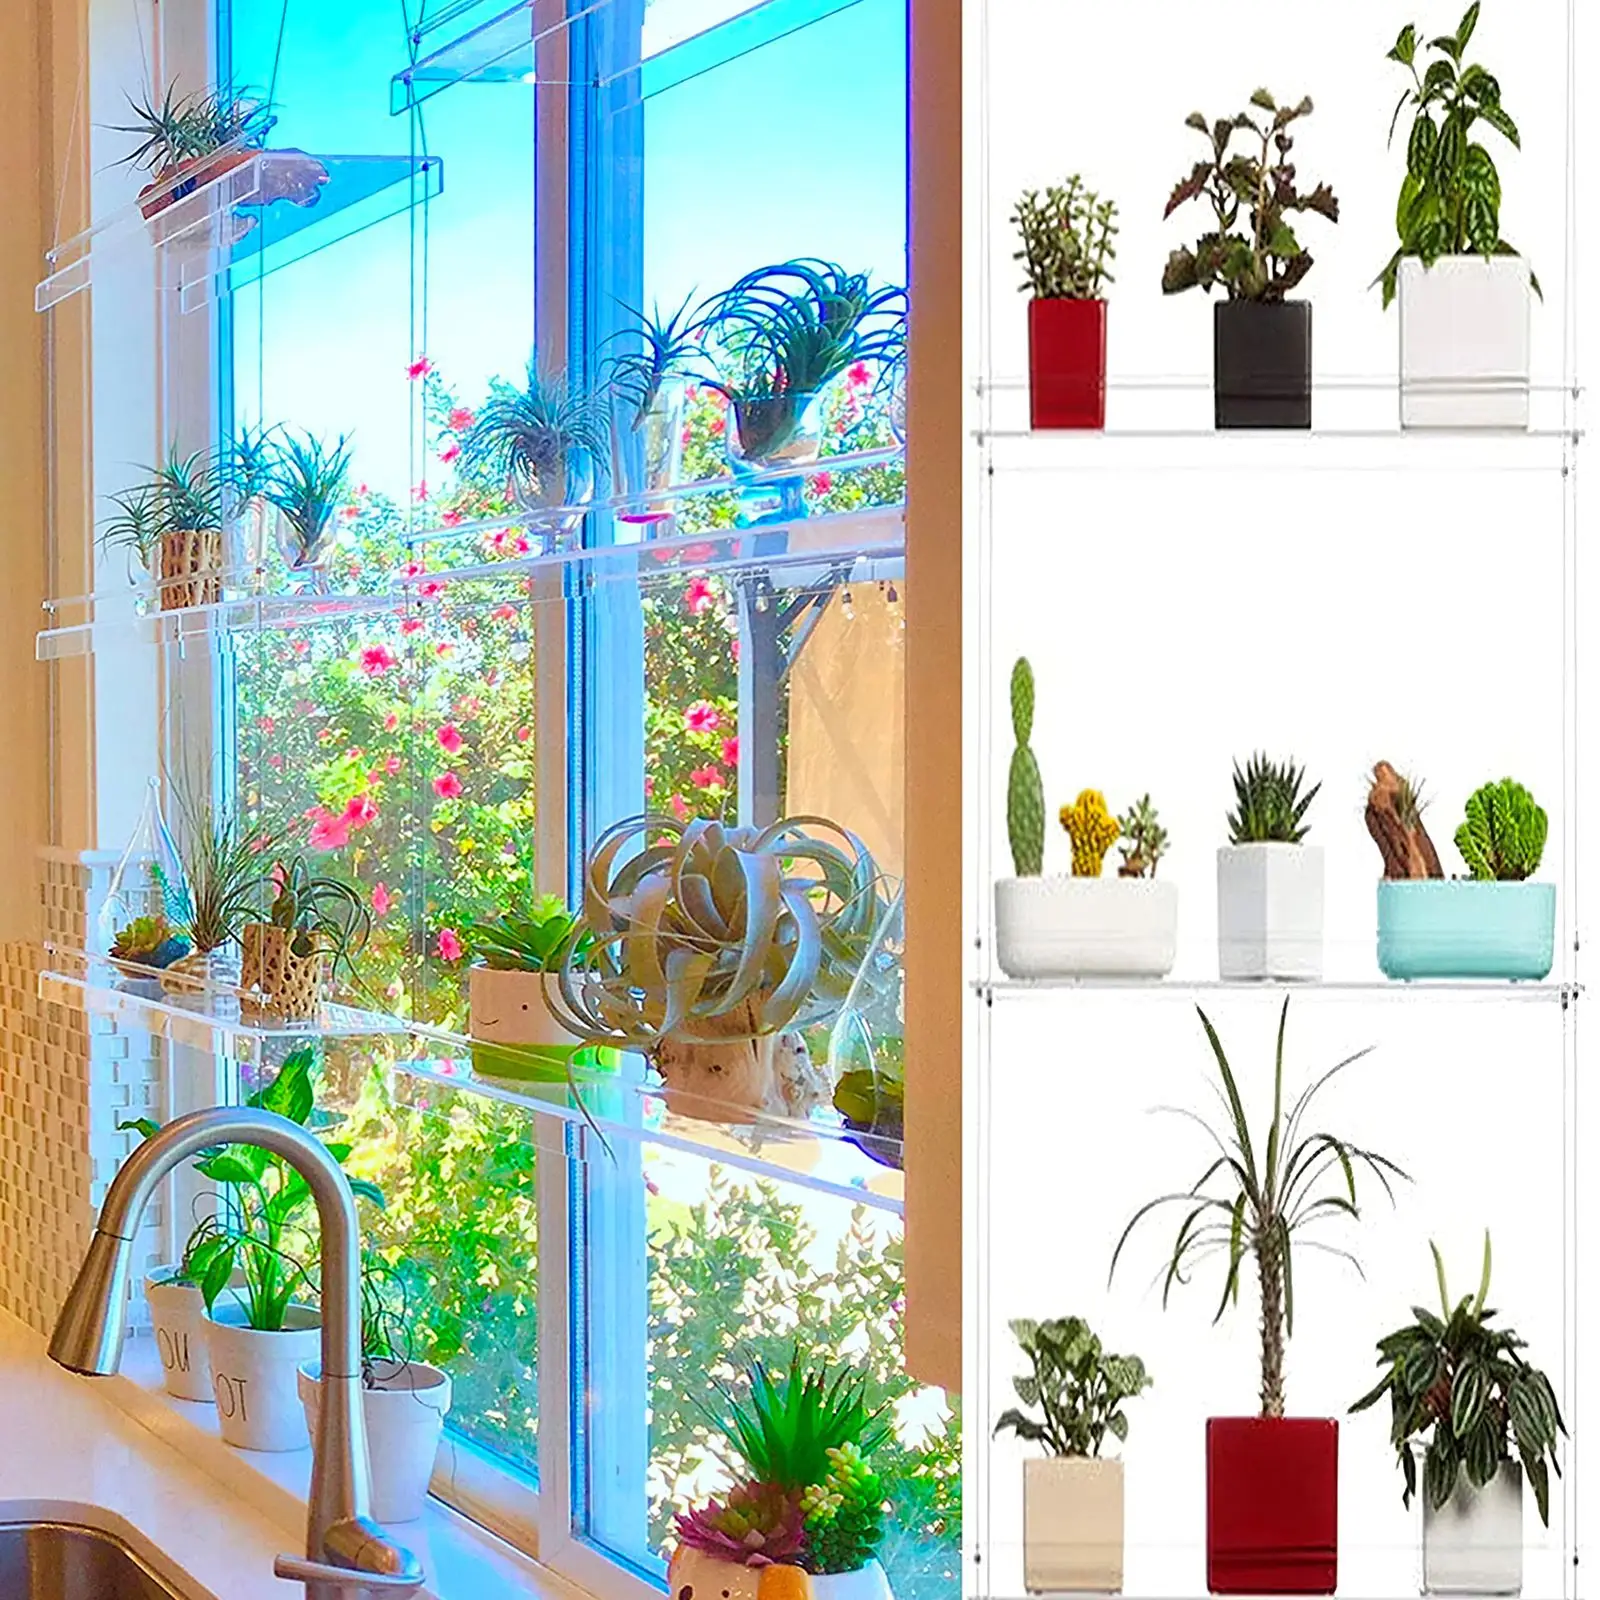 https://ae01.alicdn.com/kf/H506f59f2c72c48e0b1e6784b669d15314/Window-Plant-Shelf-Hanging-Shelf-Plant-Shelves-Plant-Stand-Indoor-Garden-Decor-Plant-Storage-Holders-Home.jpg